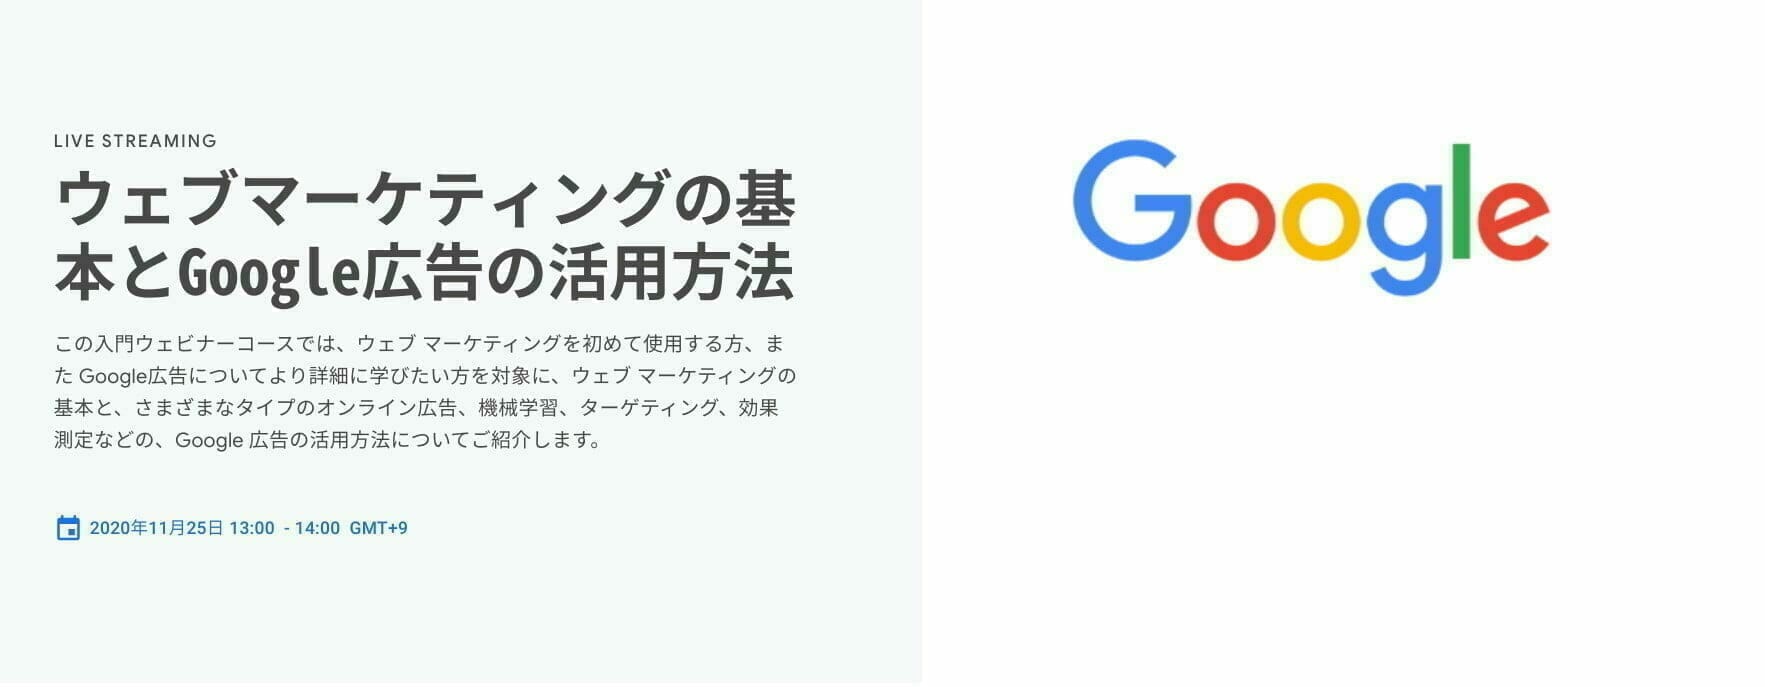 [Google 広告] ウェブマーケティングの基本とGoogle広告の活用方法